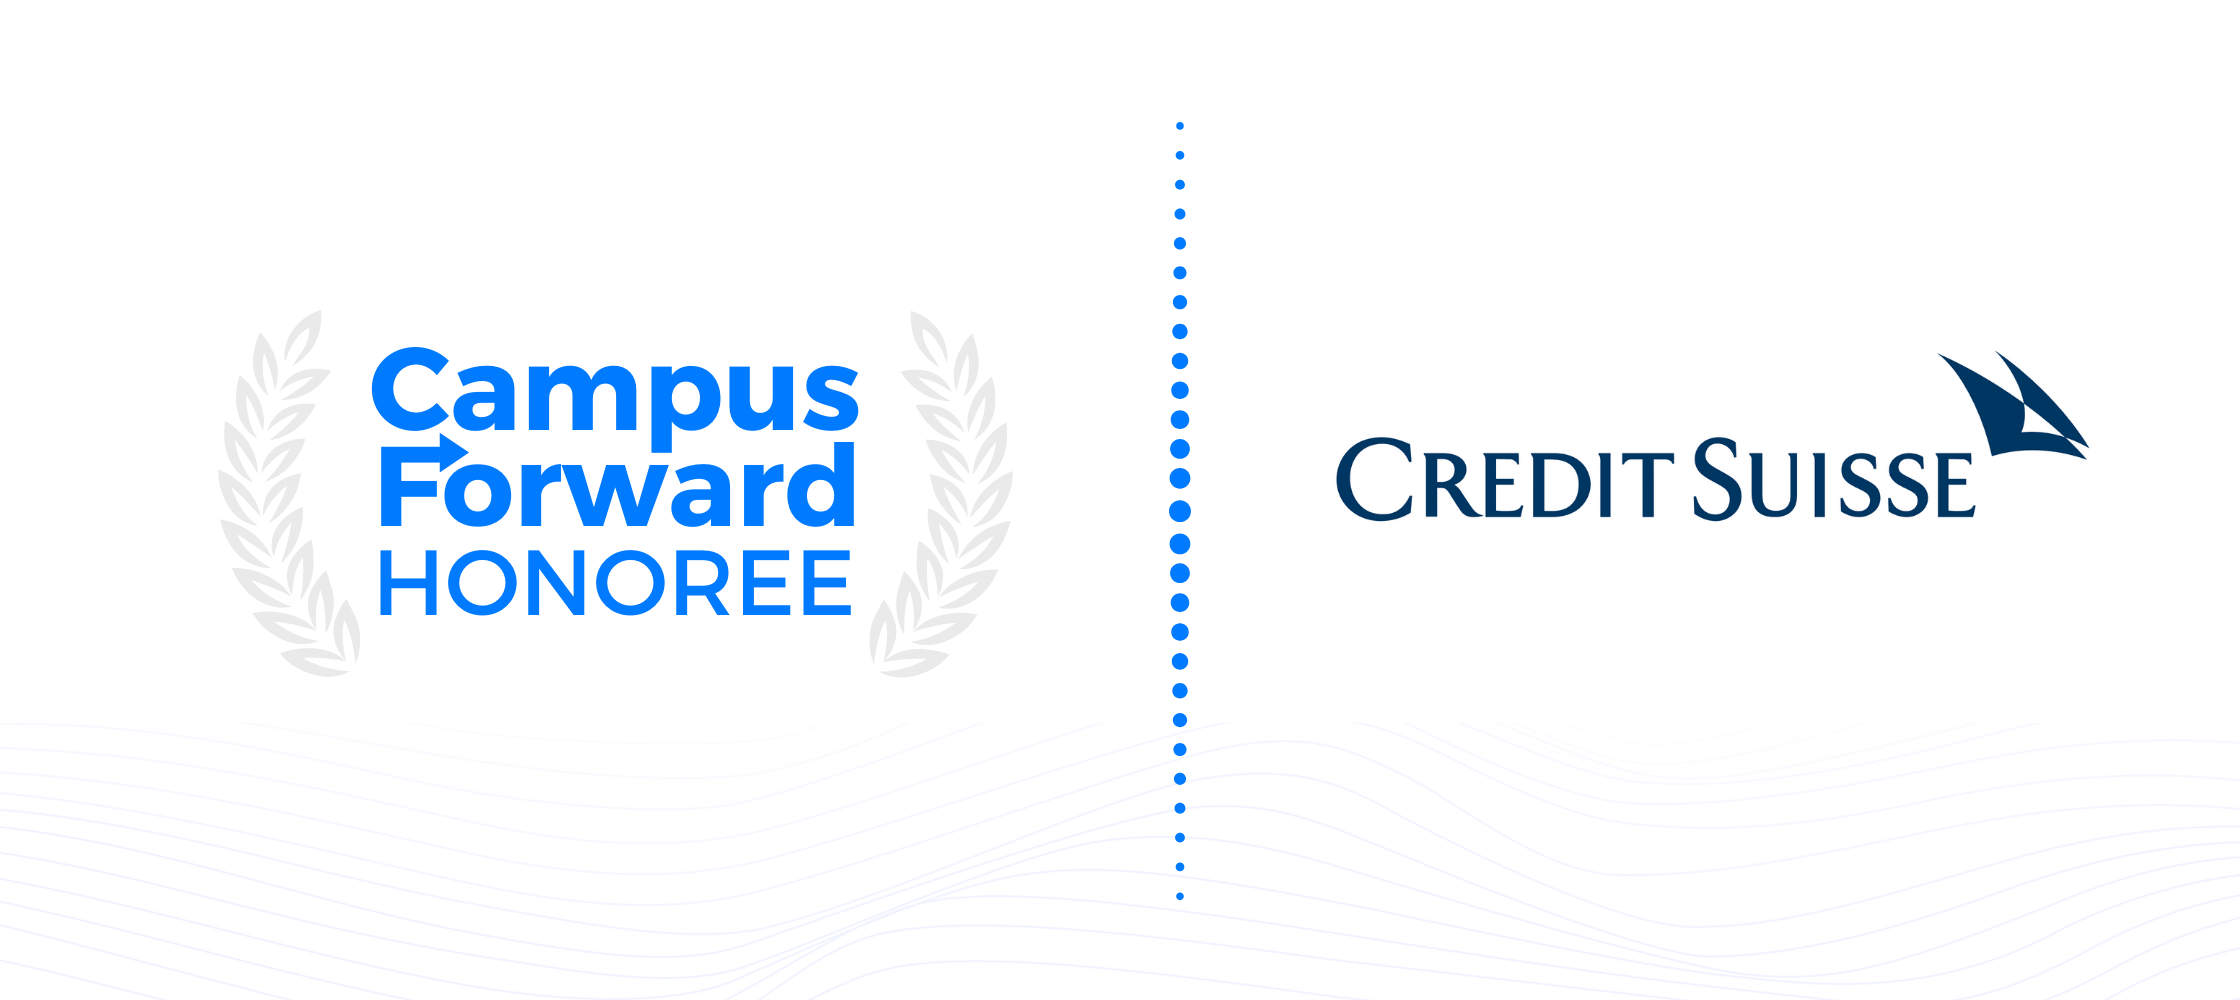 Campus Forward Honoree - Credit Suisse